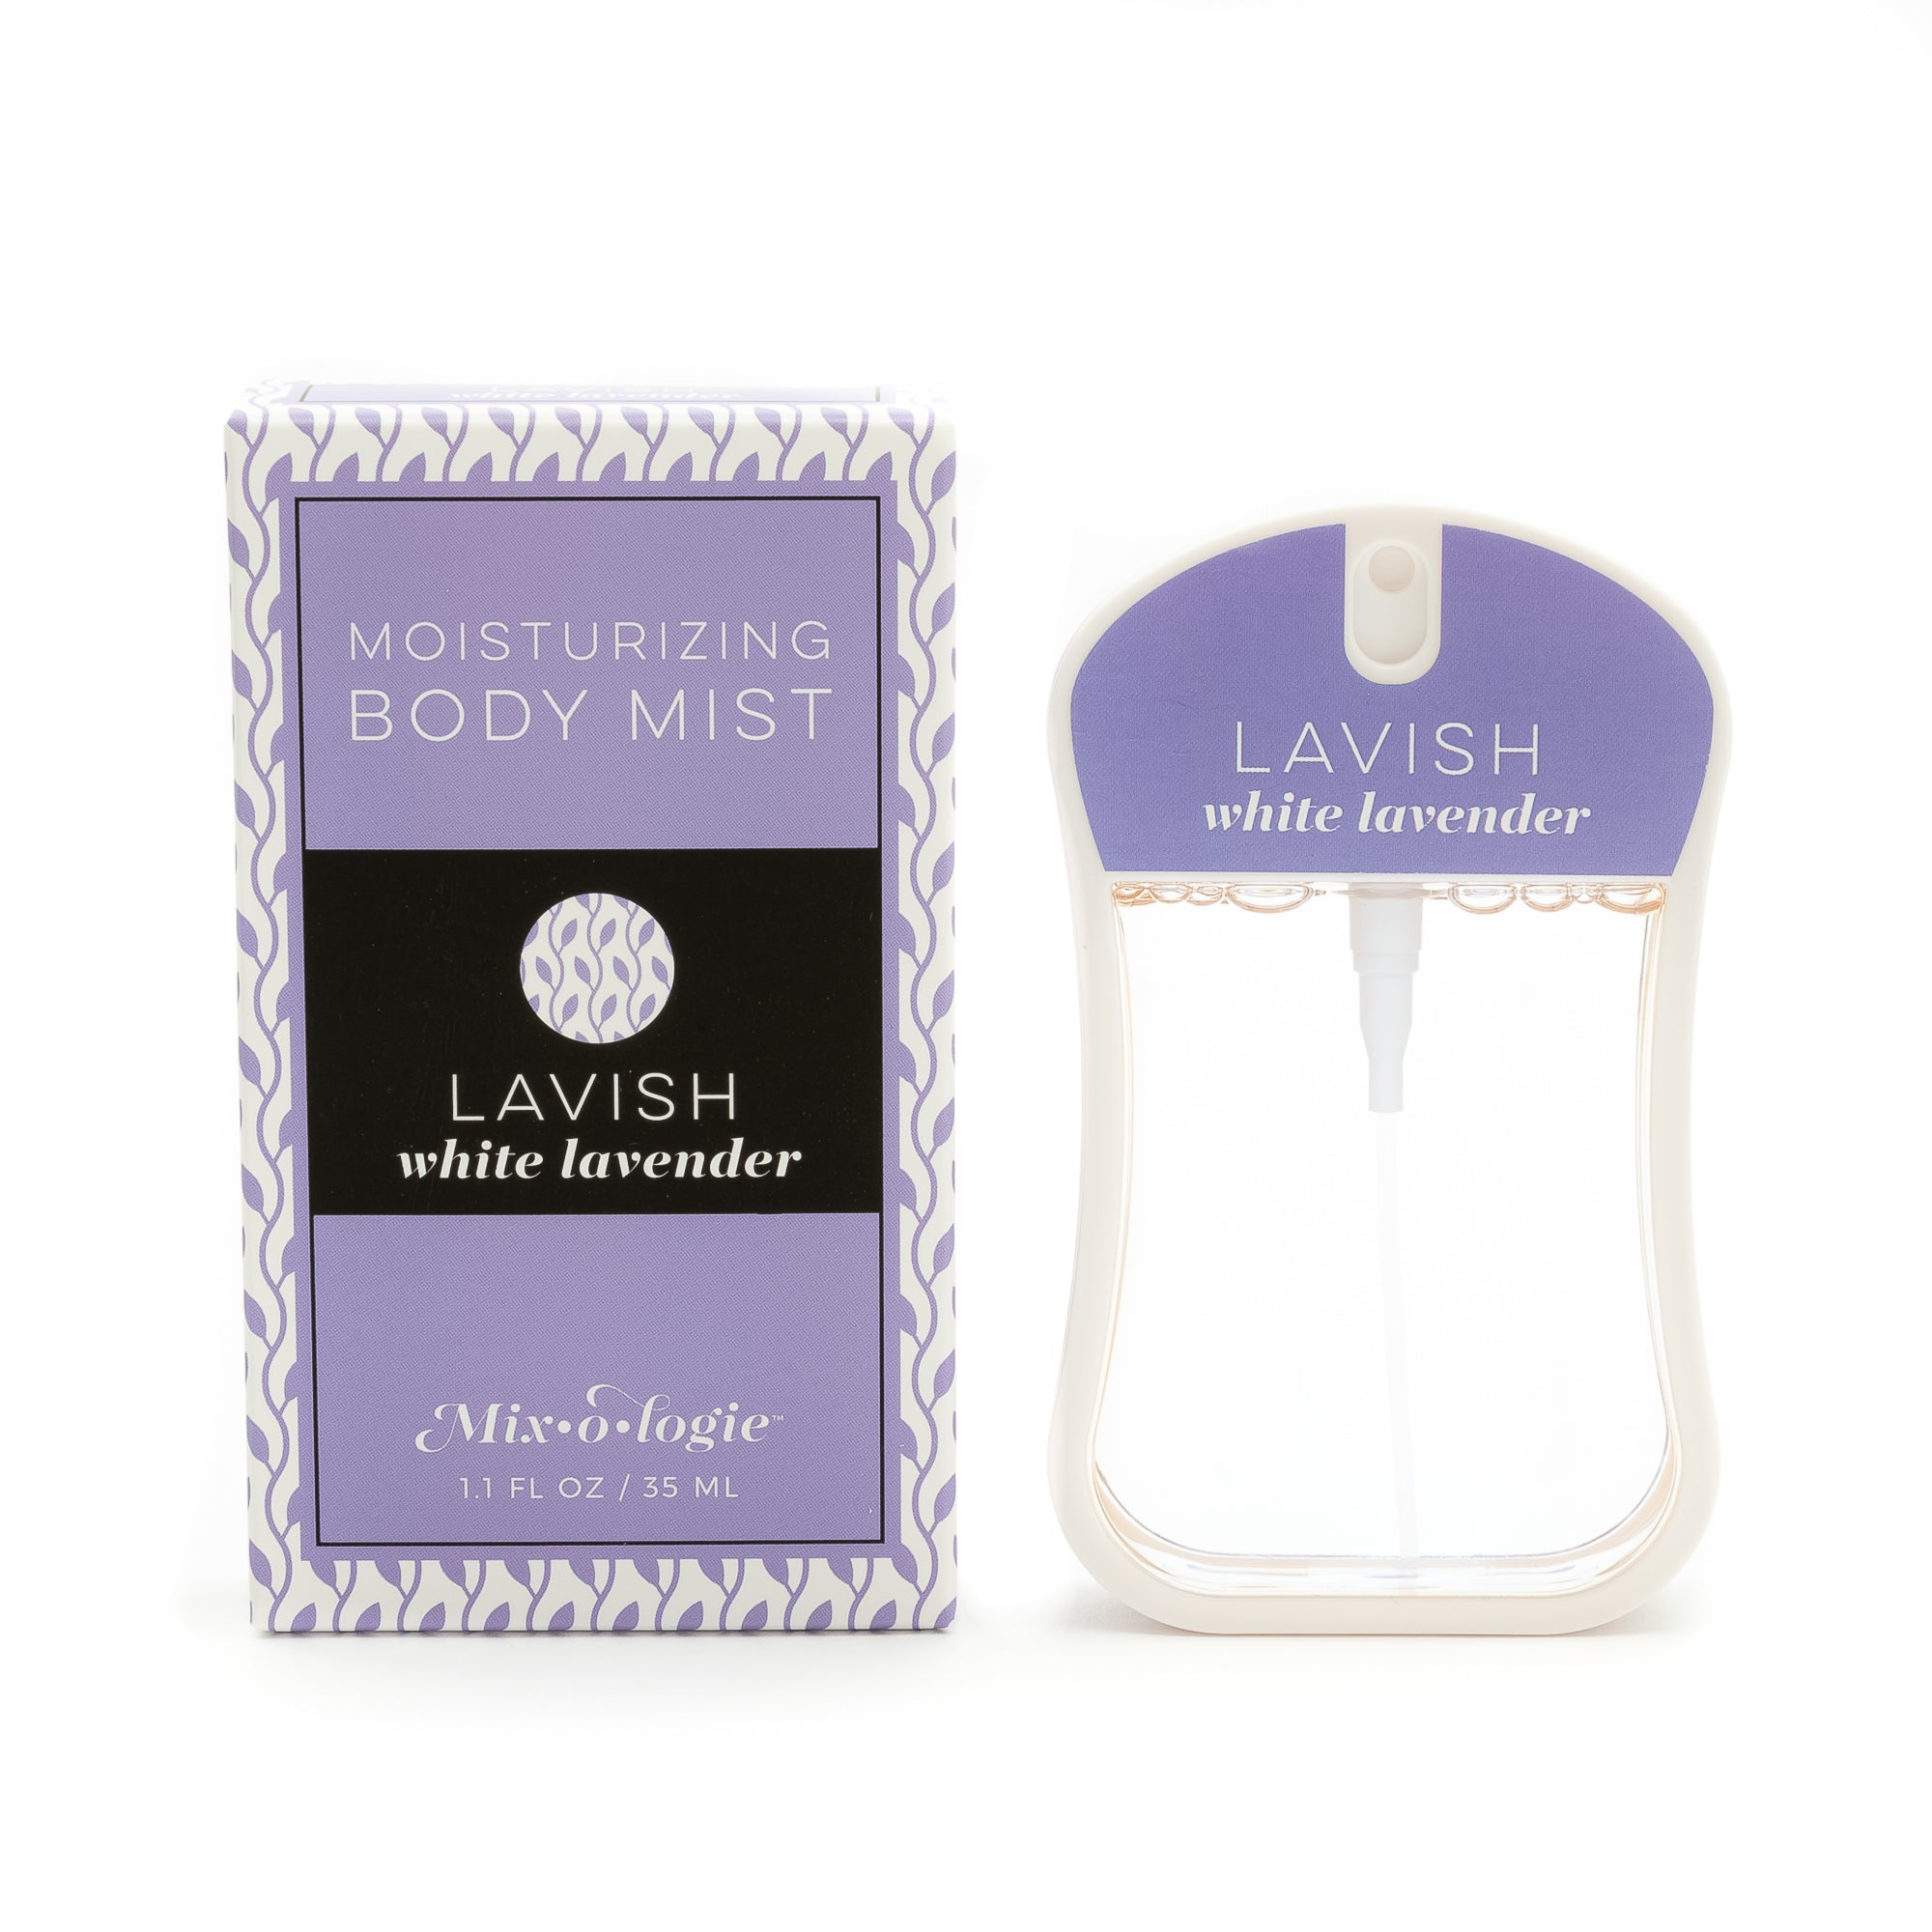 Lavish (white lavender) Moisturizing Body Mist